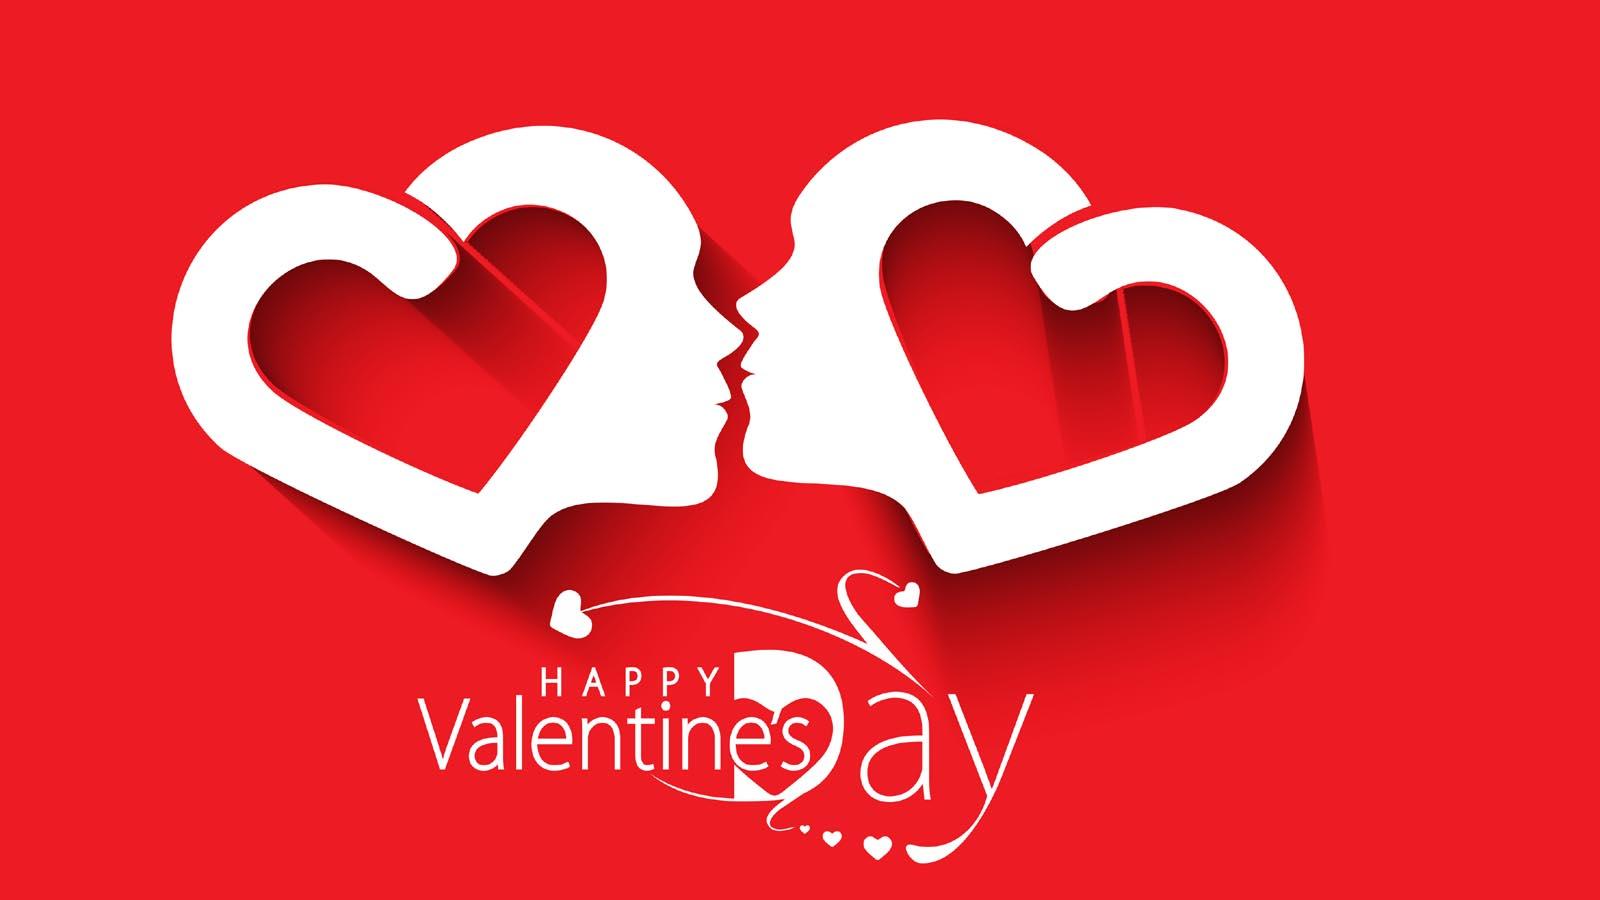 Valentine Messages for Girlfriend - Valentine Love Wishes Messages